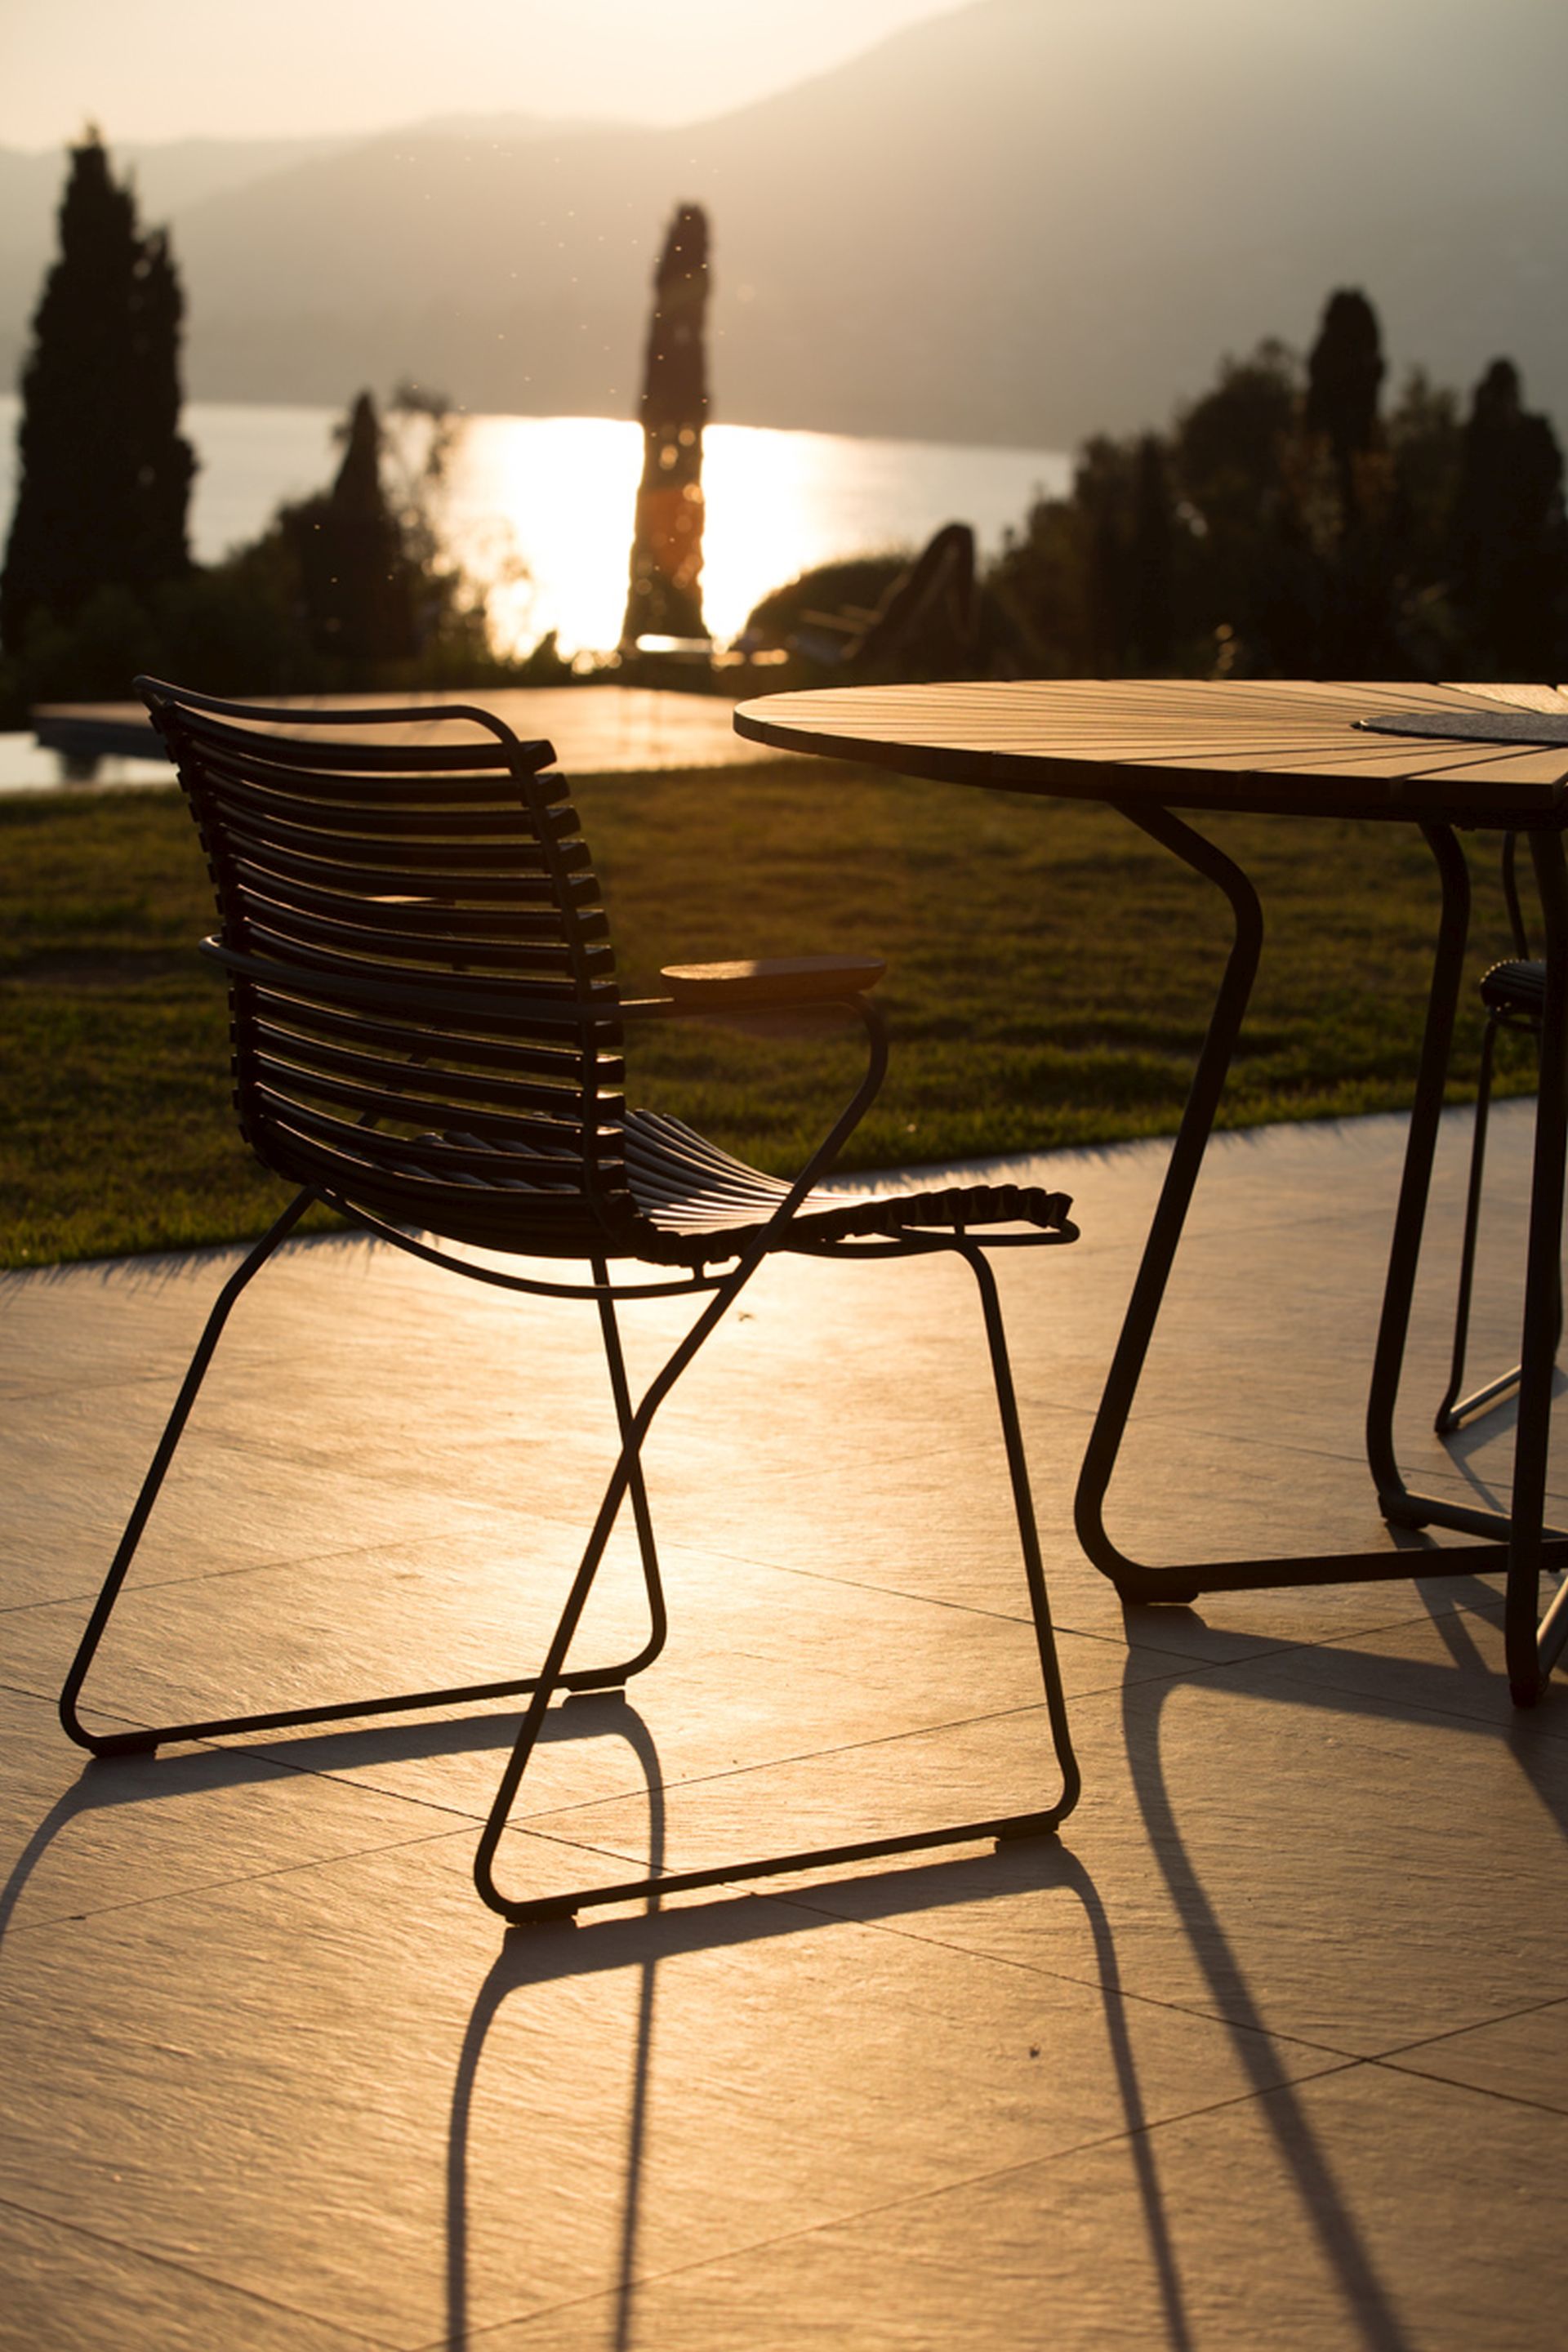 Der Houe Click Dining Armlehnstuhl mit niedriger Lehne bei Sonnenuntergang.